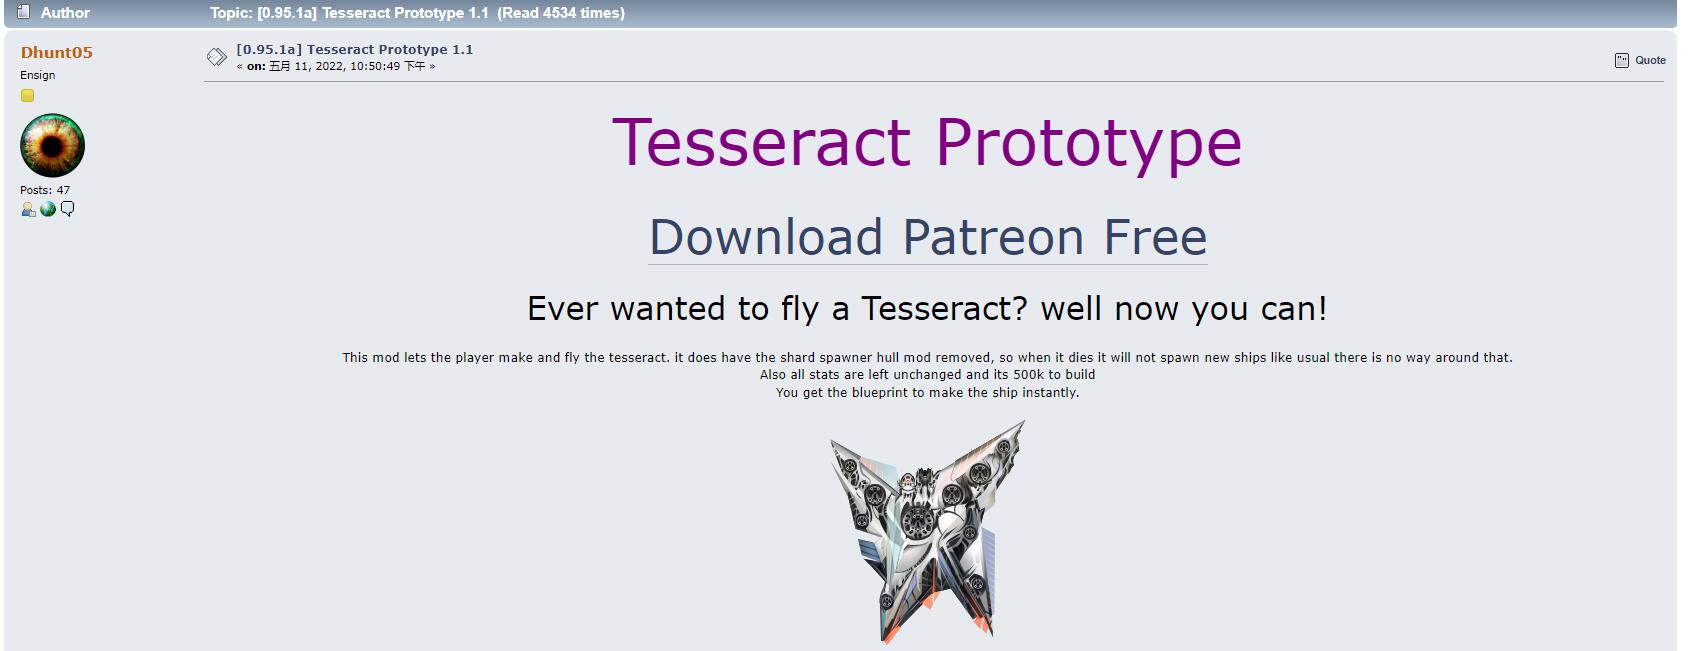 Tesseract Prototype.jpg